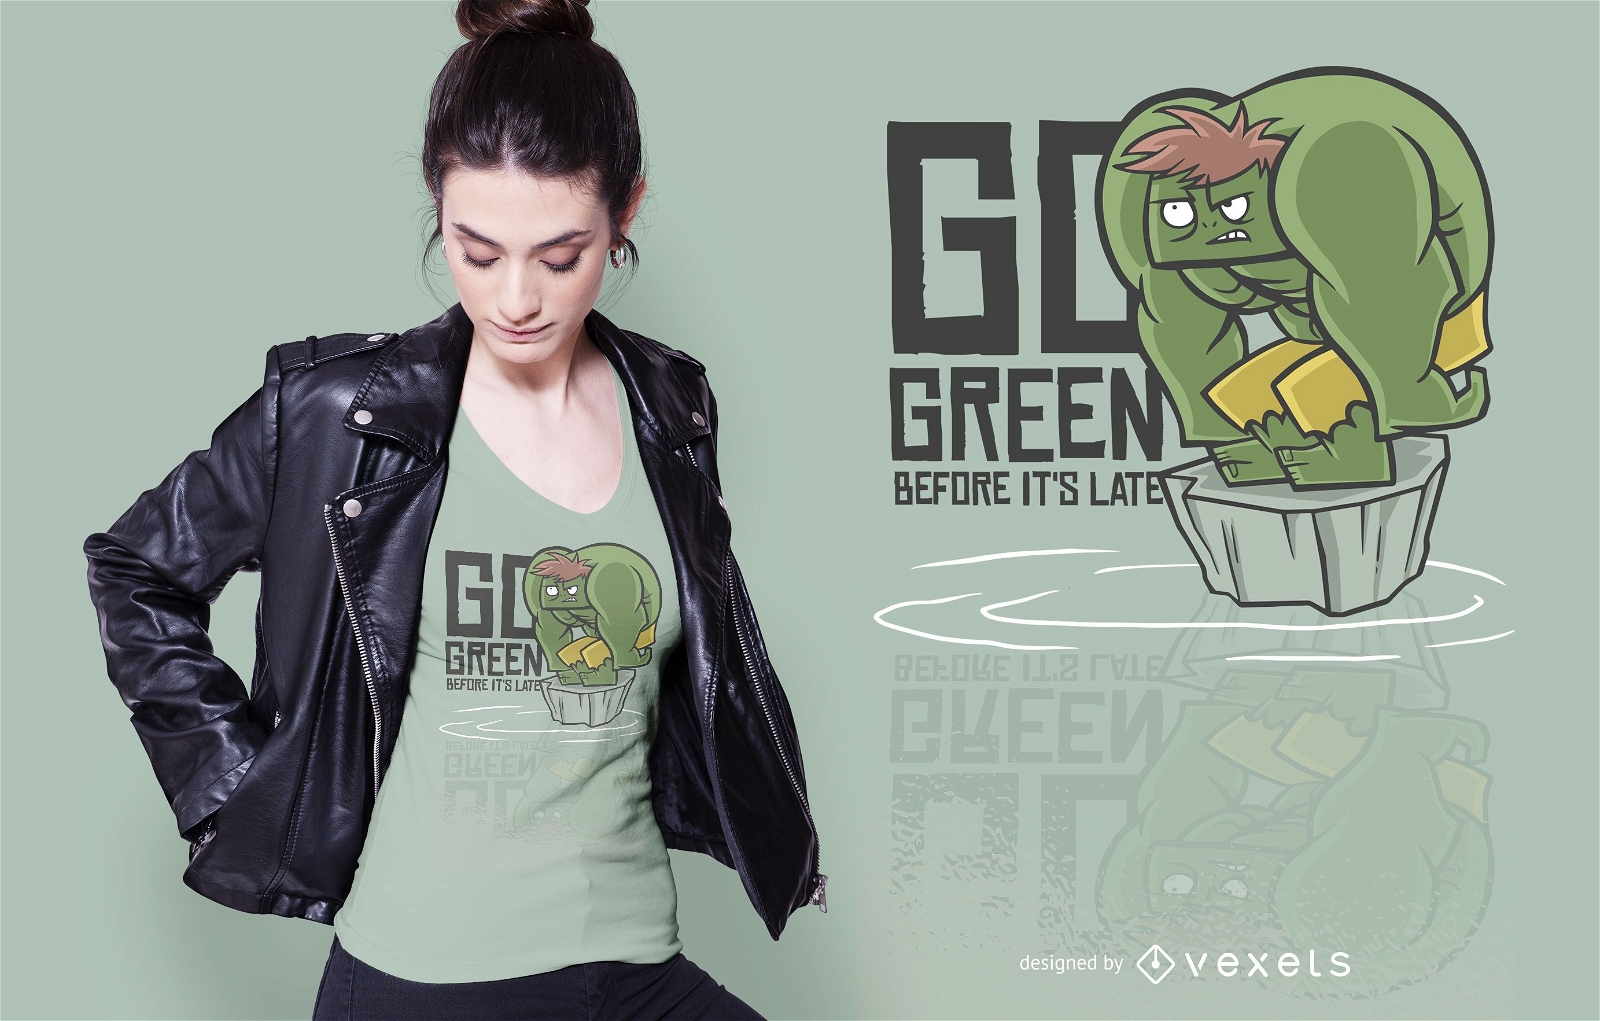 Go green quote t-shirt design